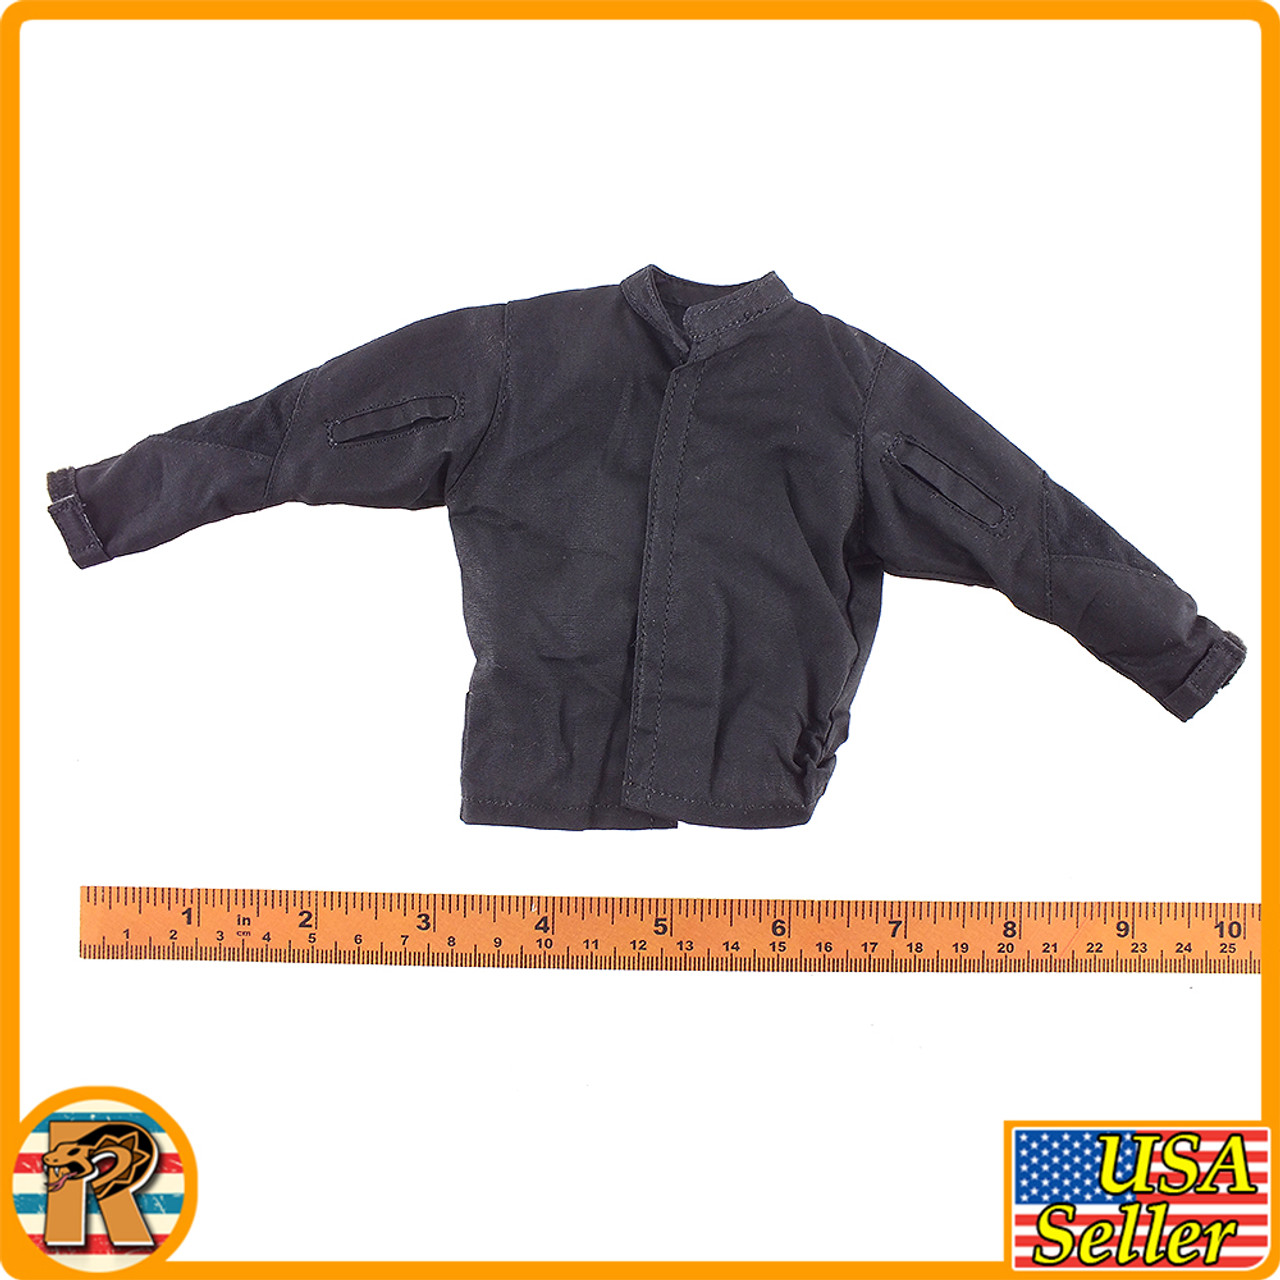 Crossbones Mercenary - Black Long Sleeve Shirt - 1/6 Scale -